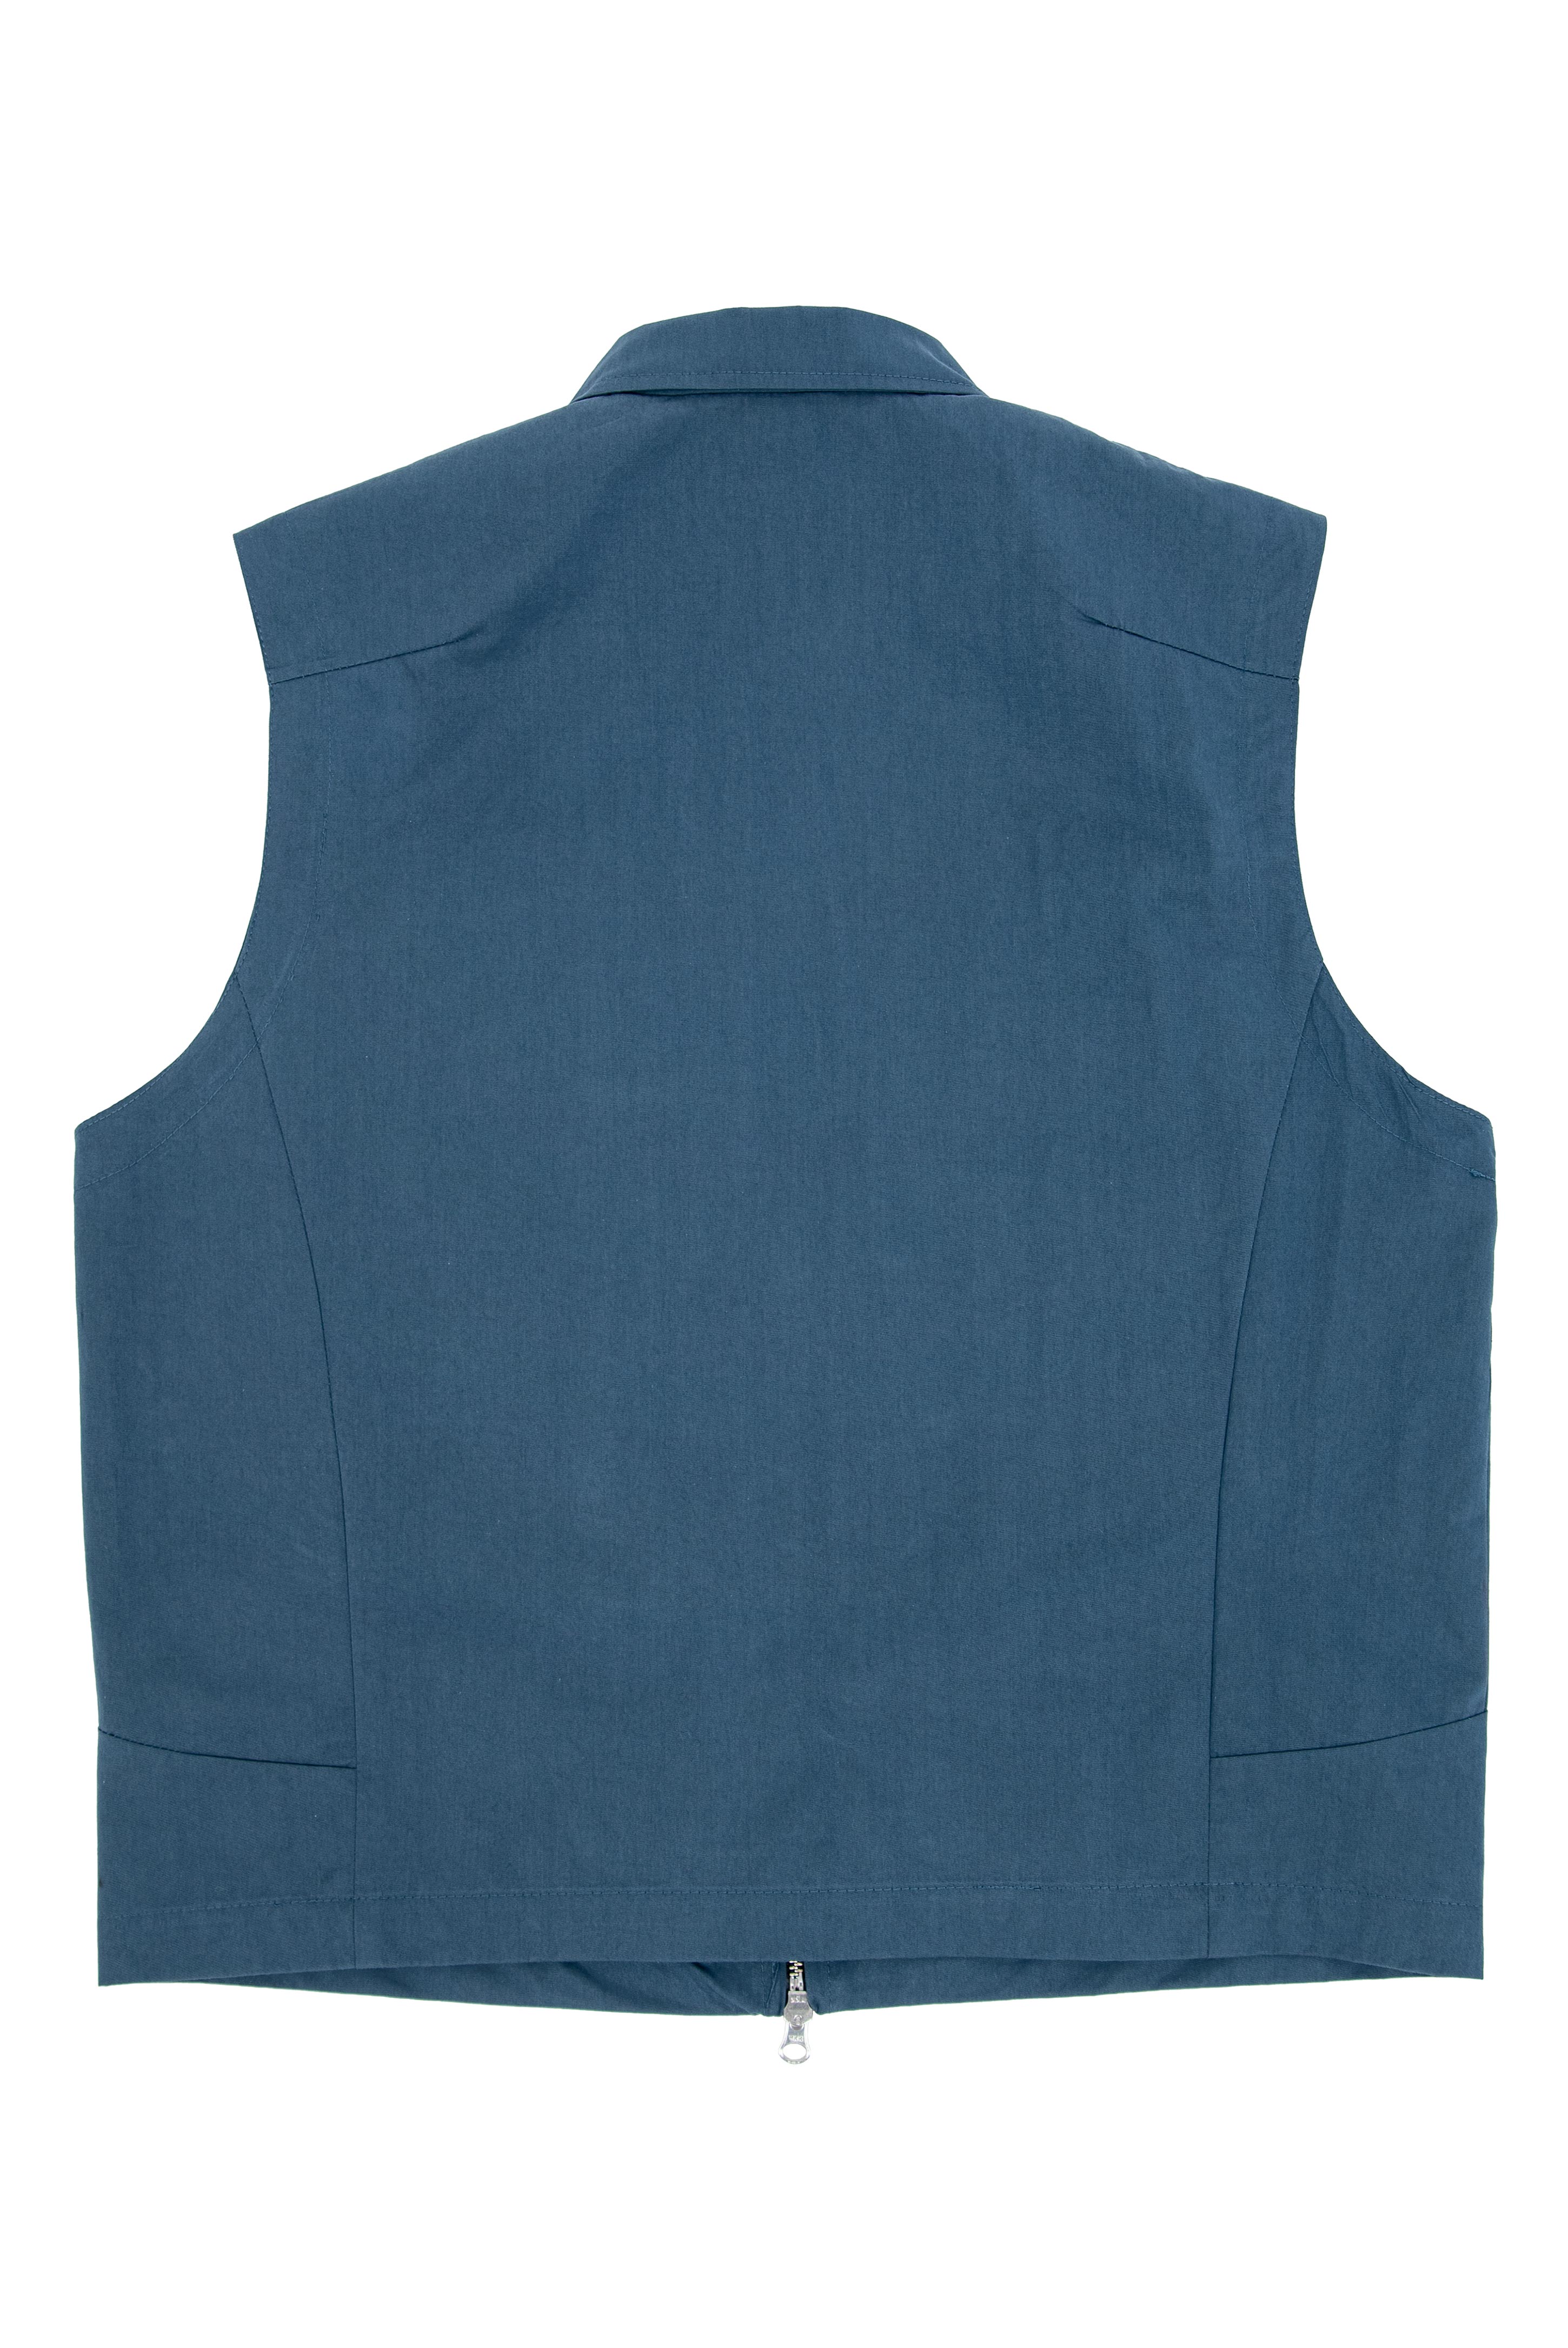 vest, utility three pockets, turquoise blue